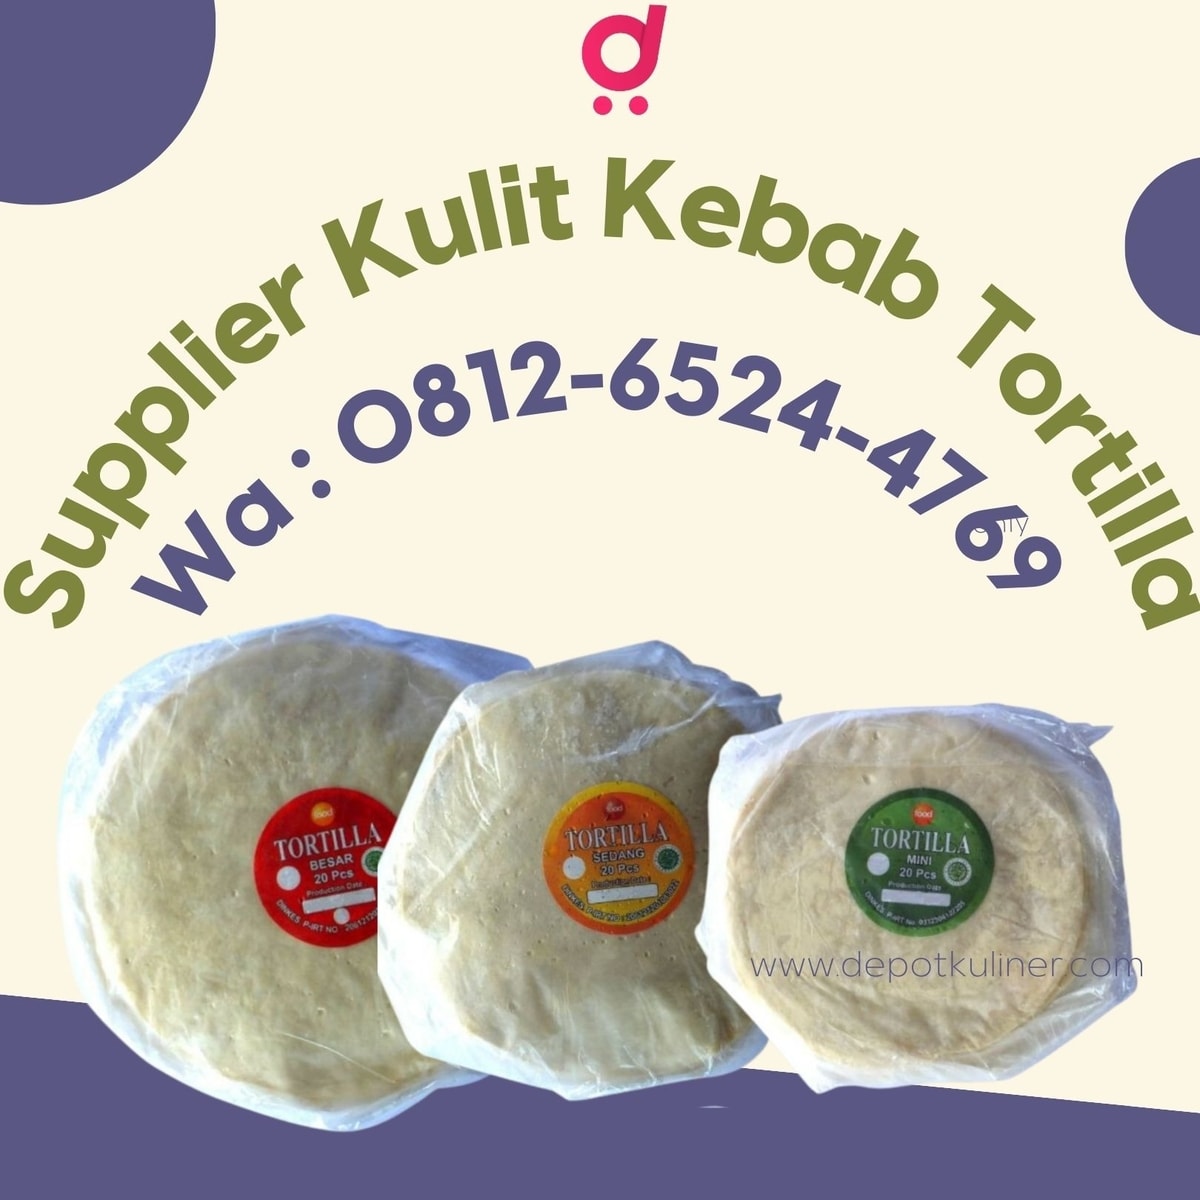 Harga Miring, Call 0812-6524-4769, Supplier Kulit Kebab Tortilla